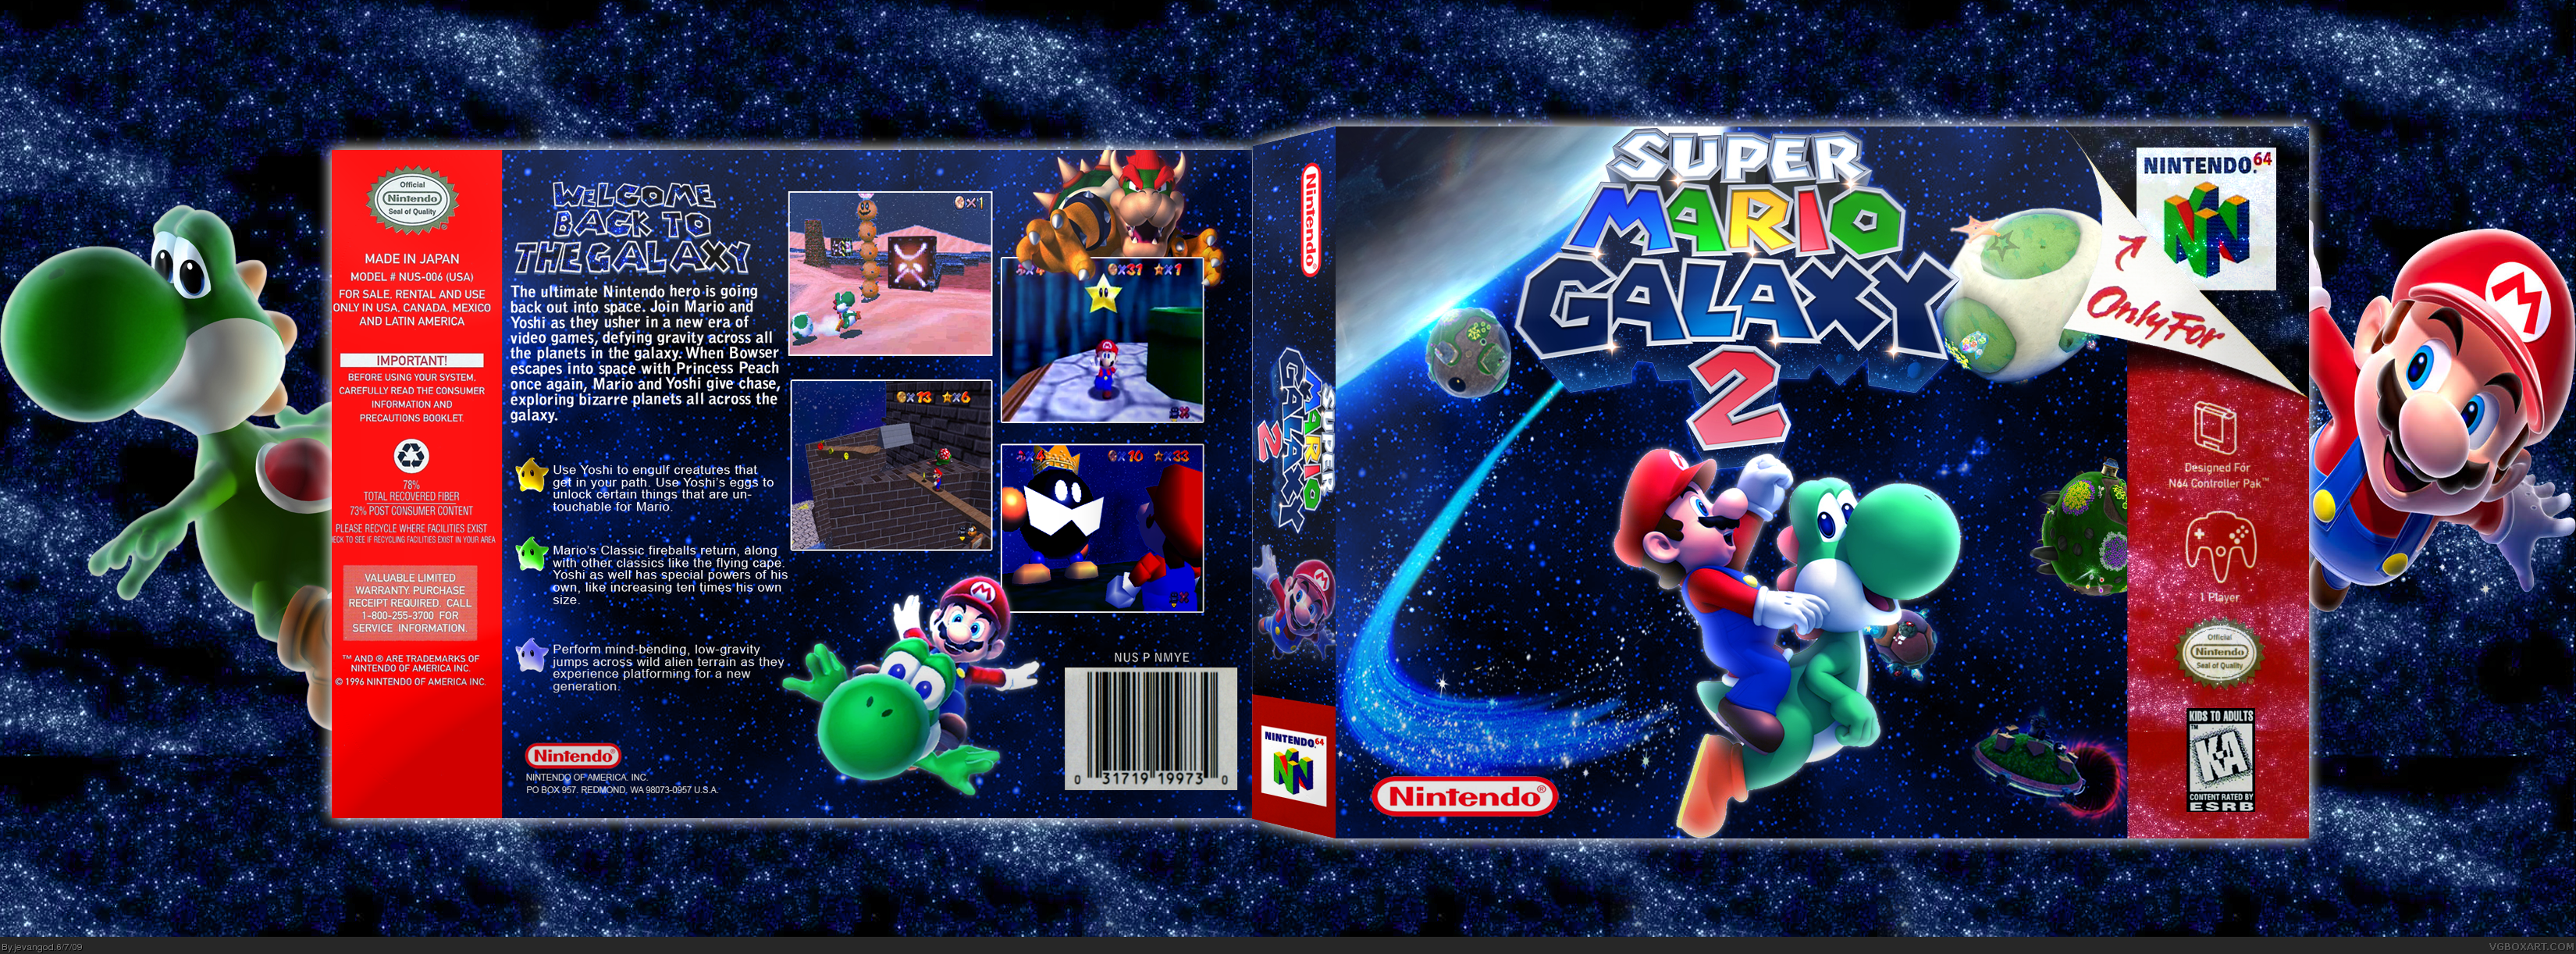 Viewing full size Super Mario Galaxy 2 box cover.